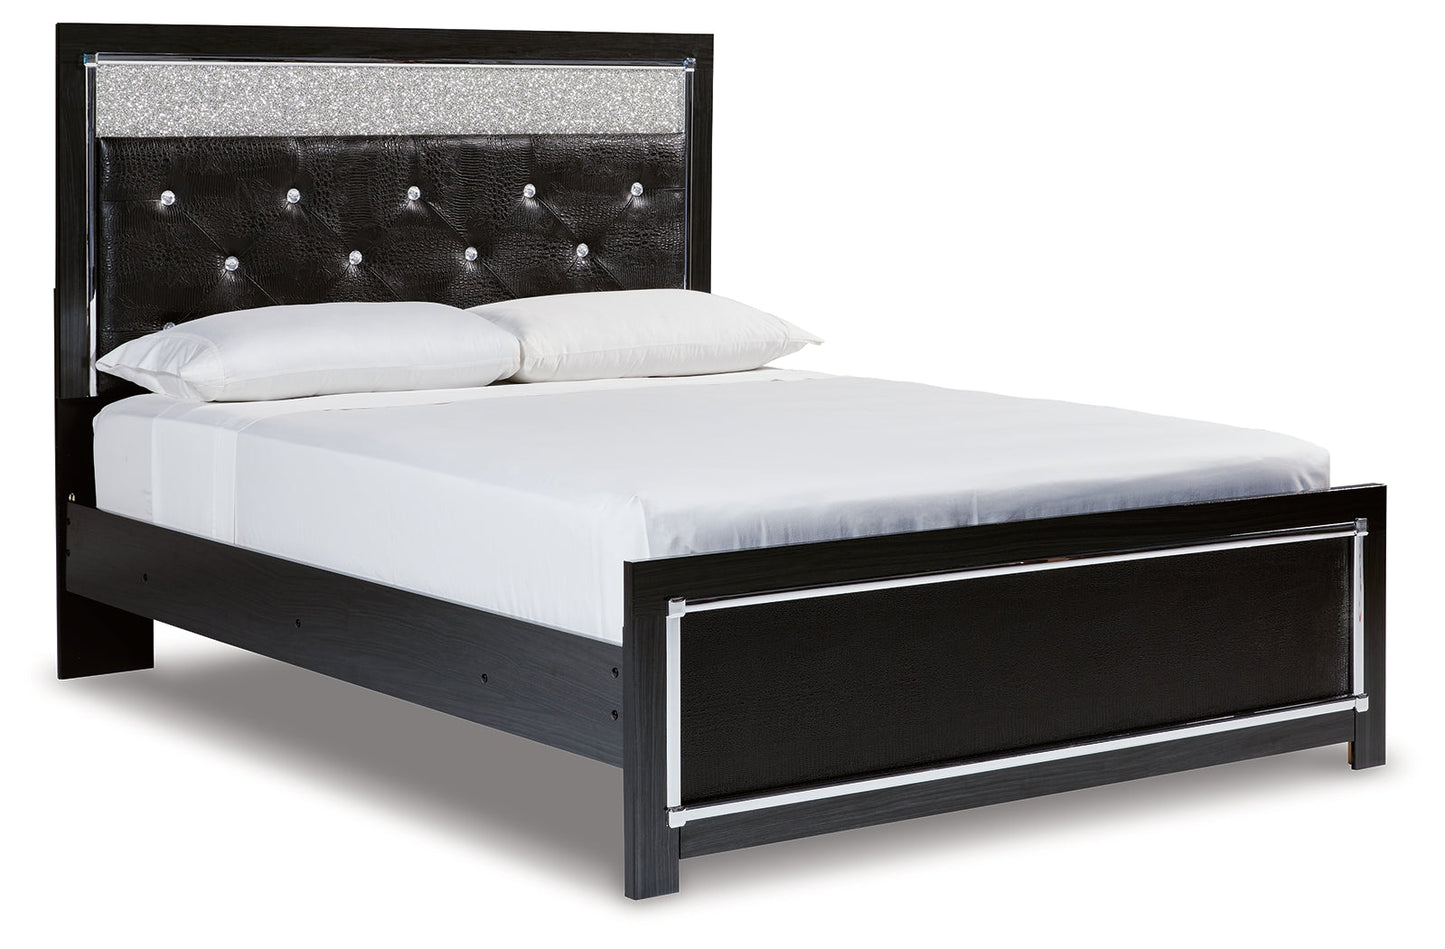 Kaydell Black Queen Upholstered Panel Bedroom Set with Dresser, Mirror and Nightstand